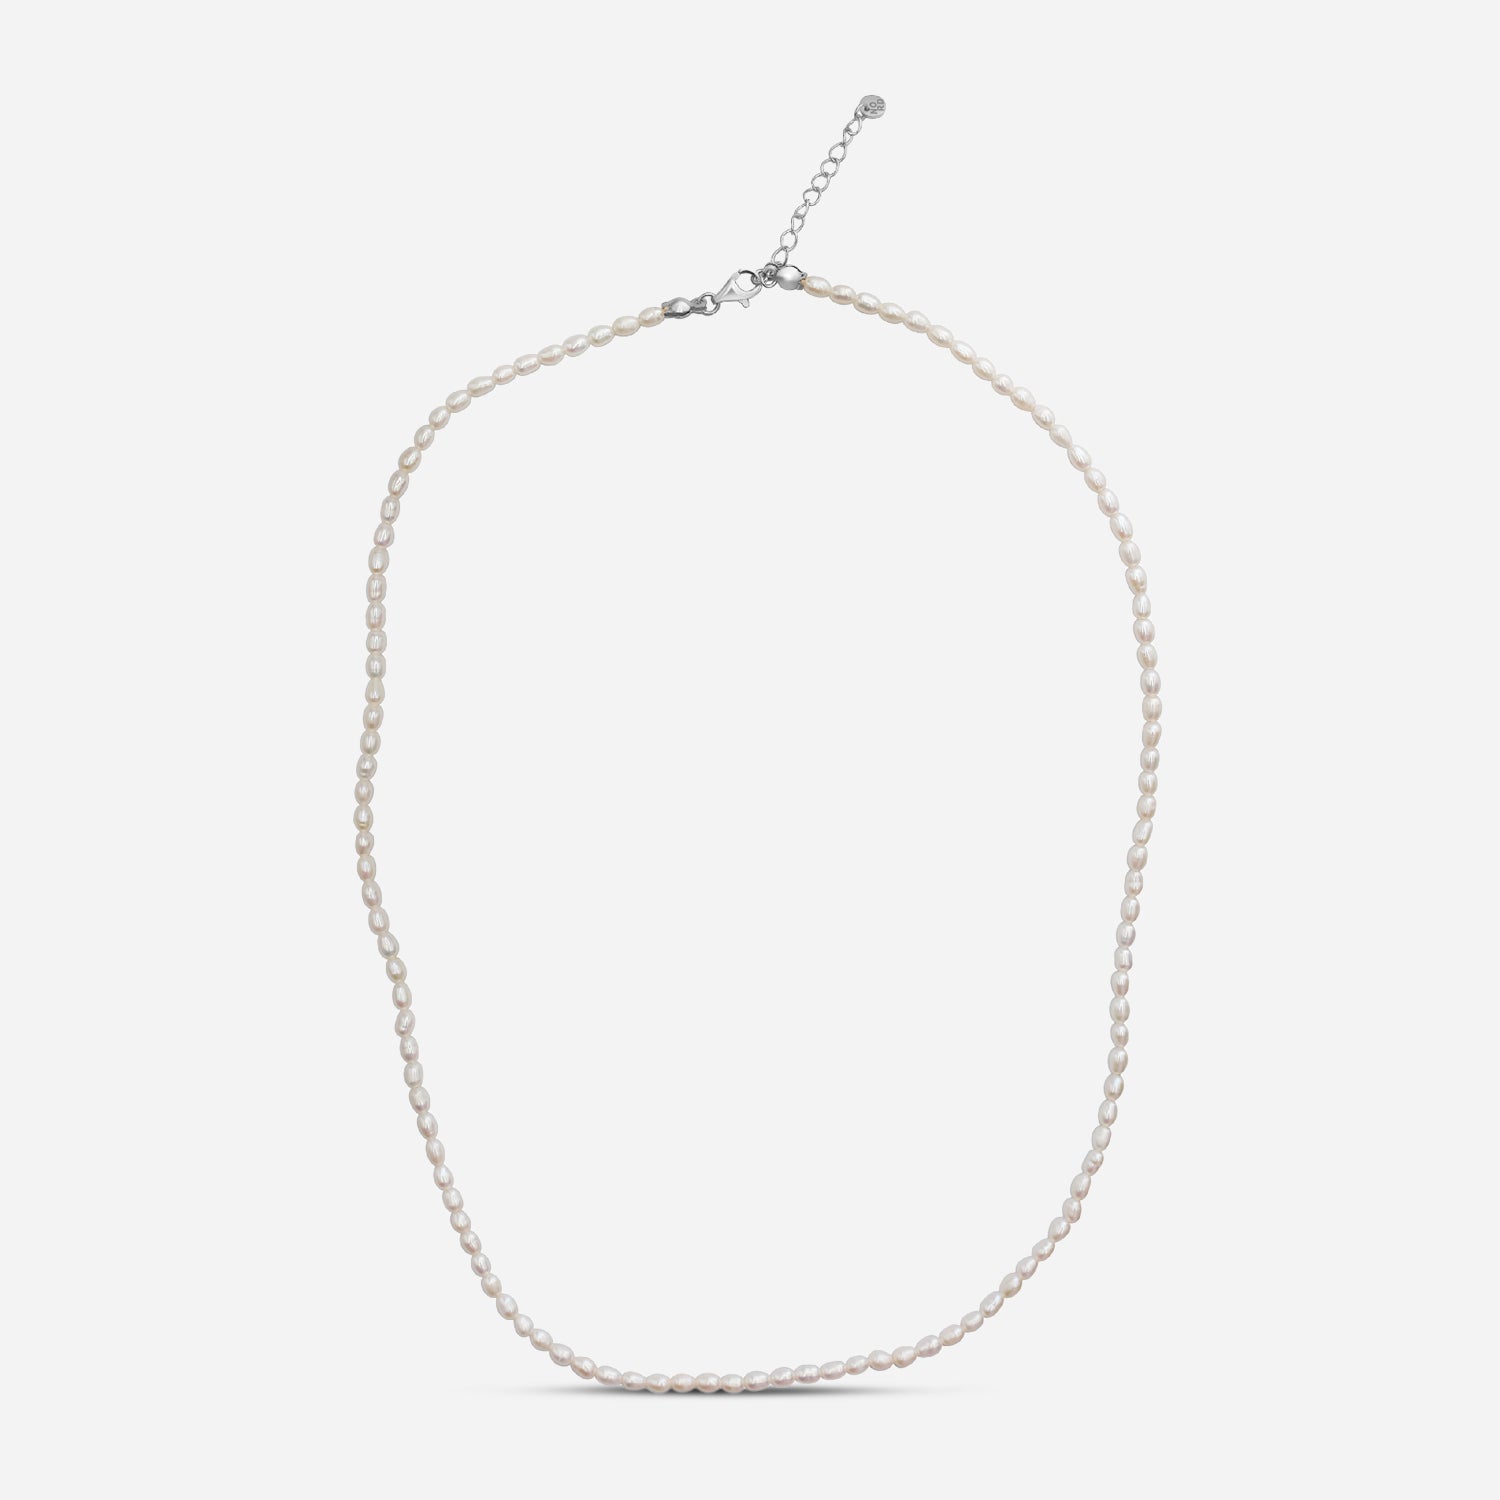 Pearl necklace "Marina" - Silver